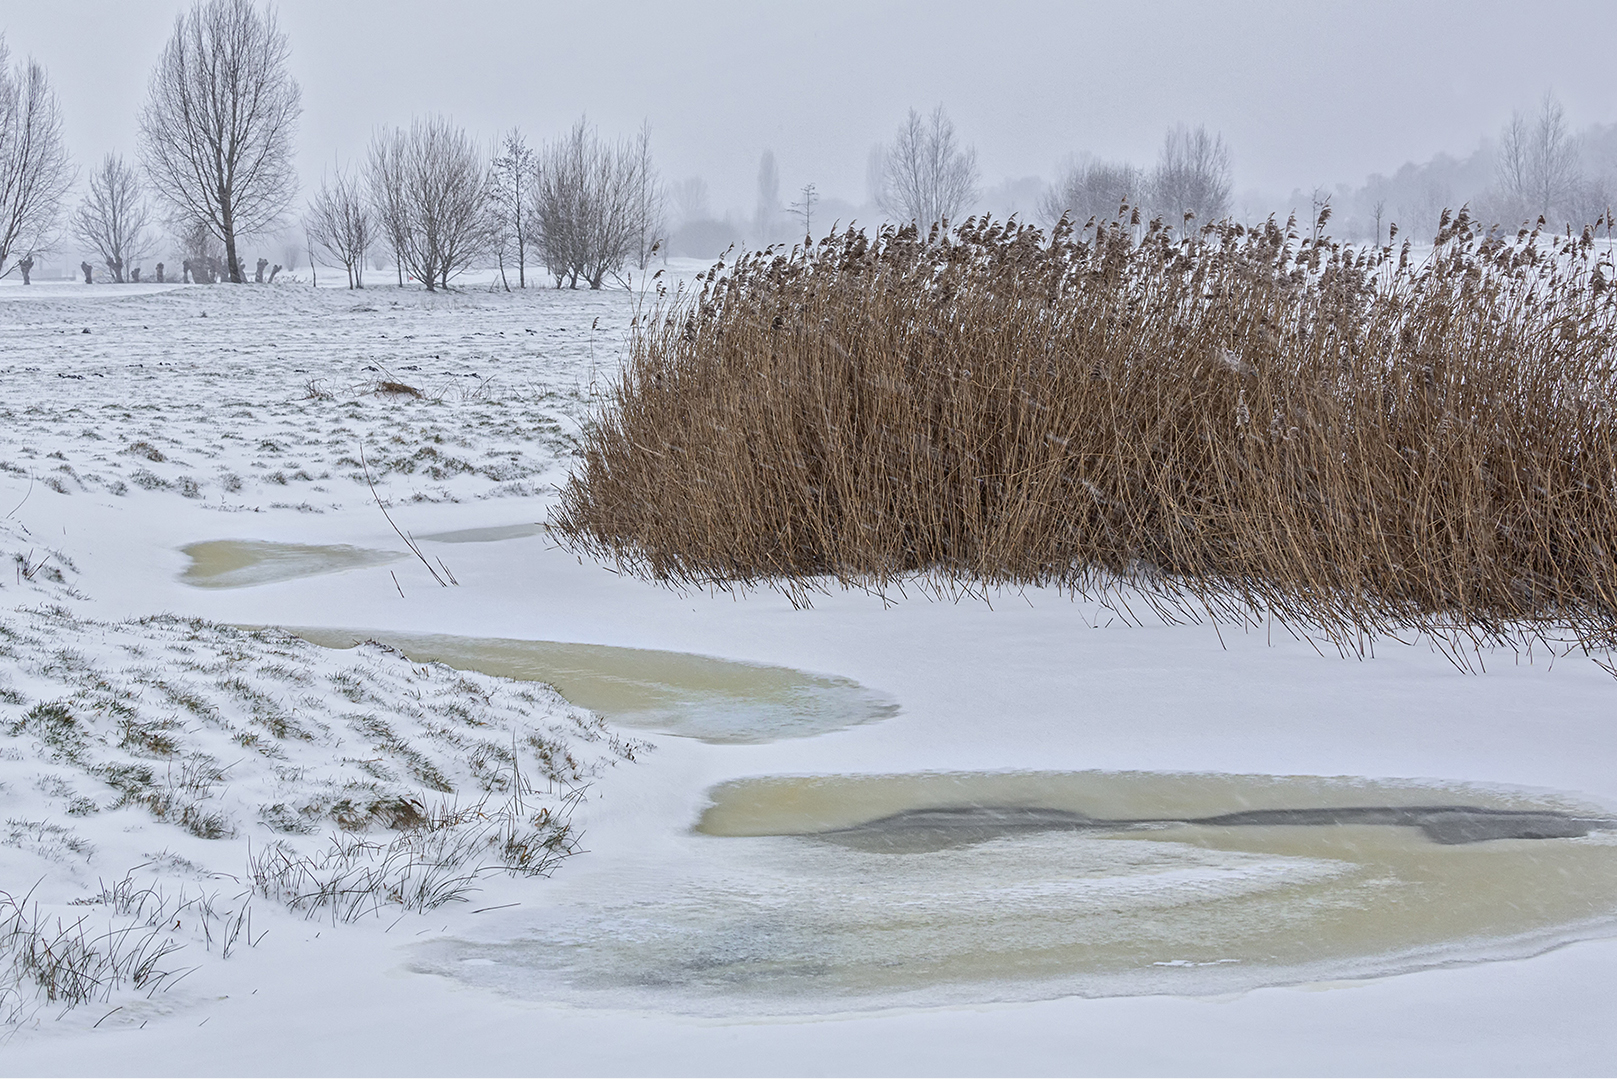 0206-1 Winter in de polder 2021-02-08 Bw-pv-rs 1620